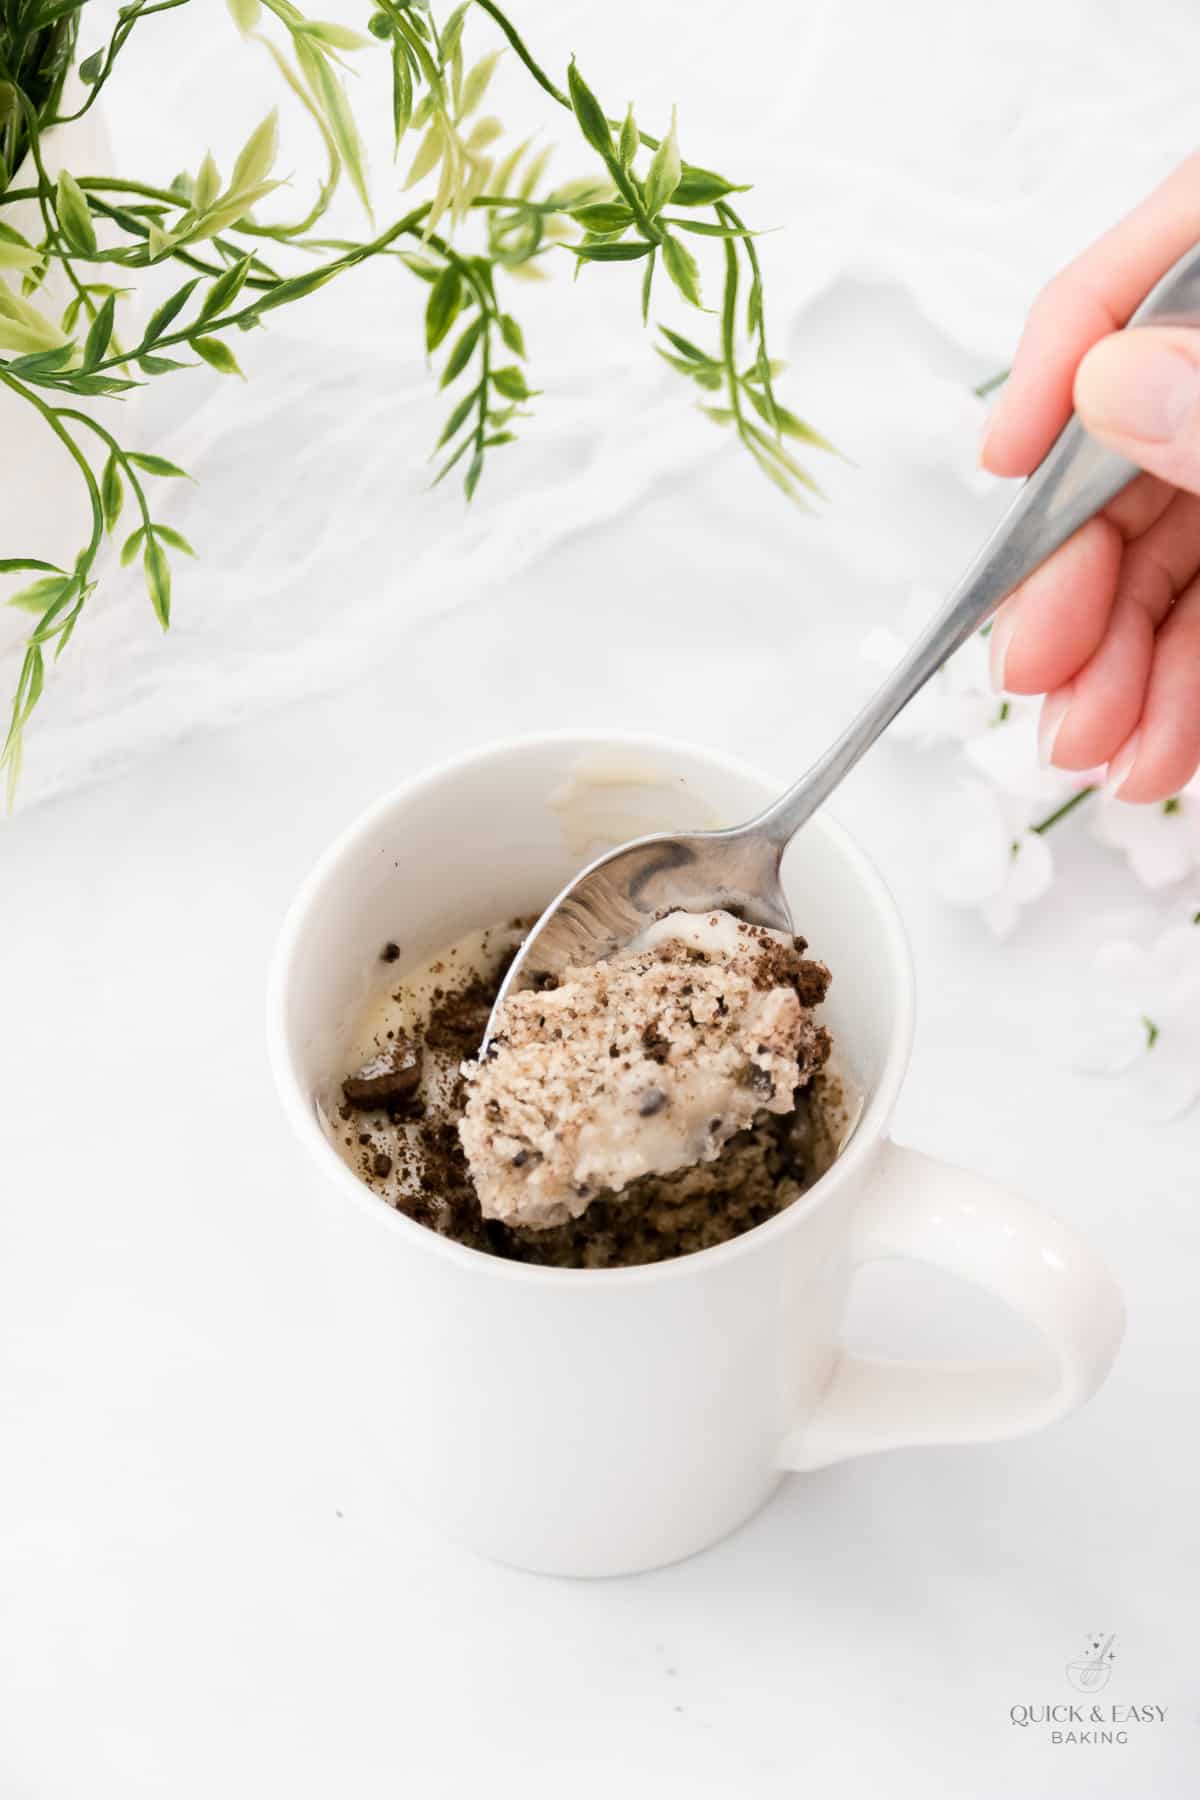 Spoon with a scoop of oreo mug cake in a white mug.